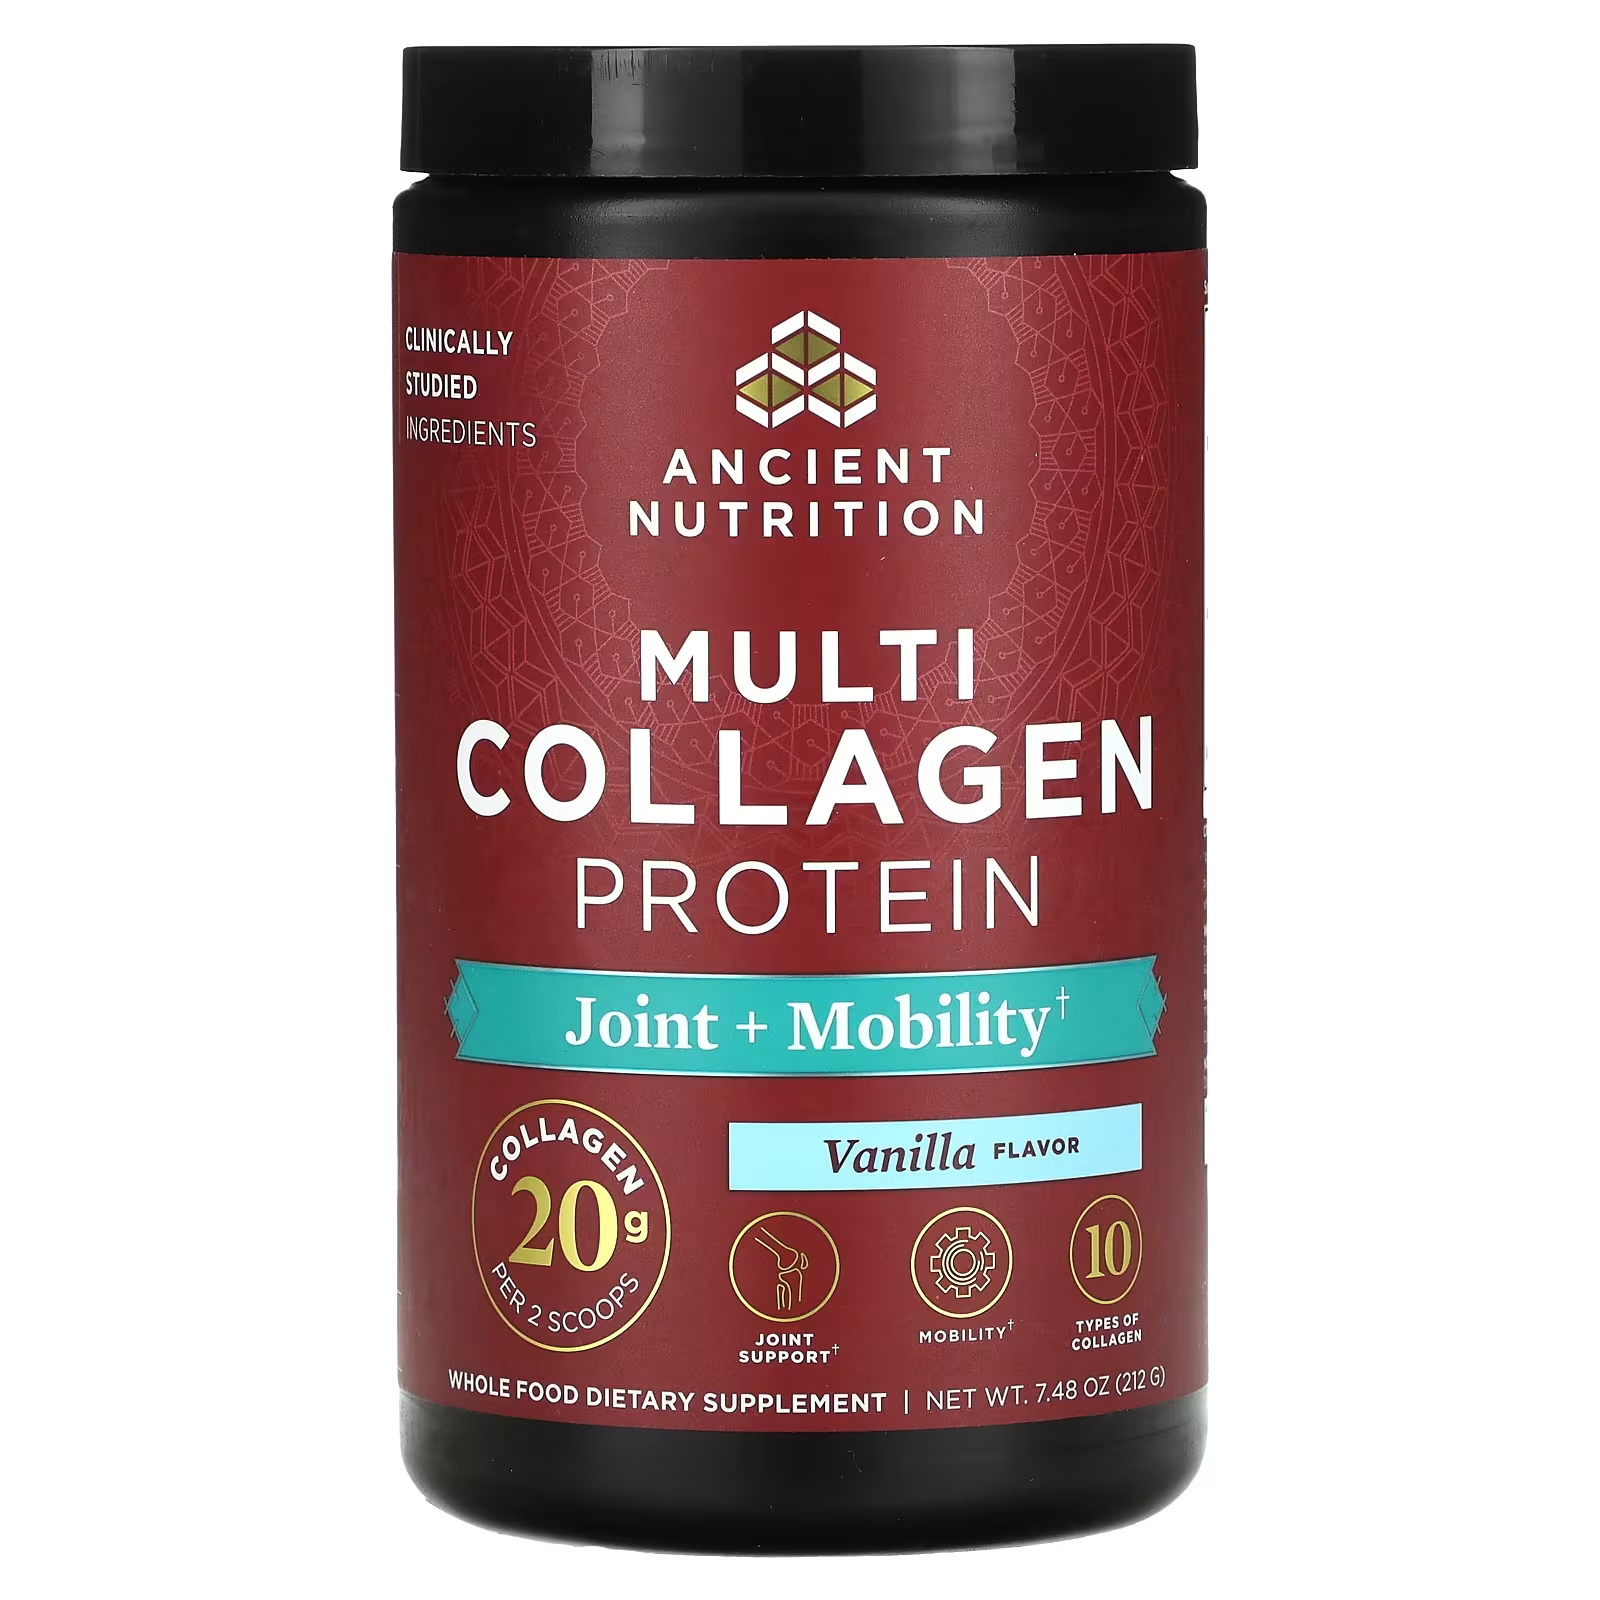 Пищевая добавка Ancient Nutrition Multi Collagen Protein Joint + Mobility Vanilla, 212 г ancient nutrition кето протеин шоколад 567 8 грамма